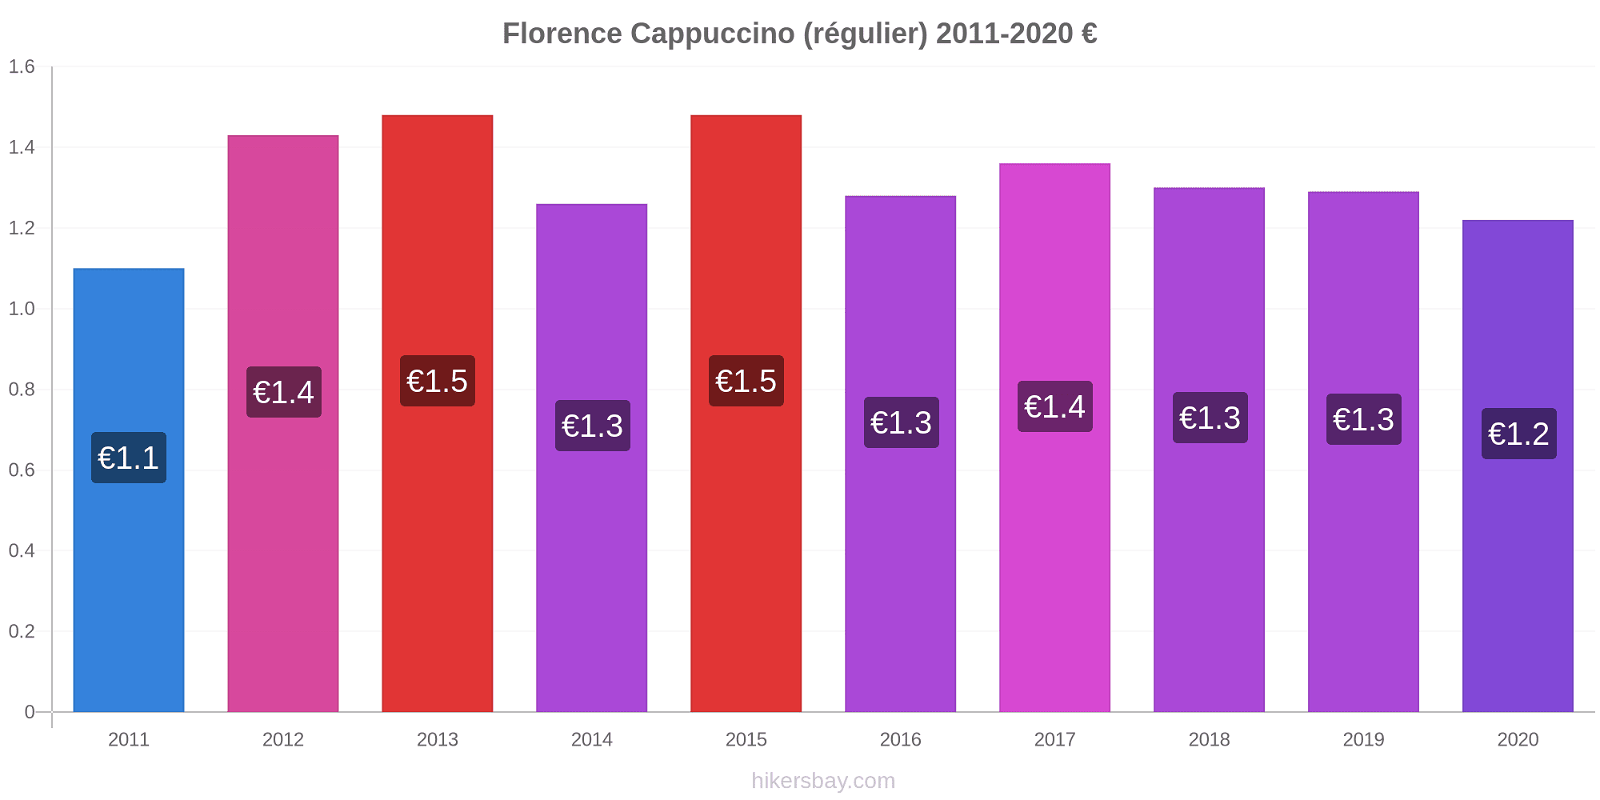 Florence changements de prix Cappuccino (régulier) hikersbay.com